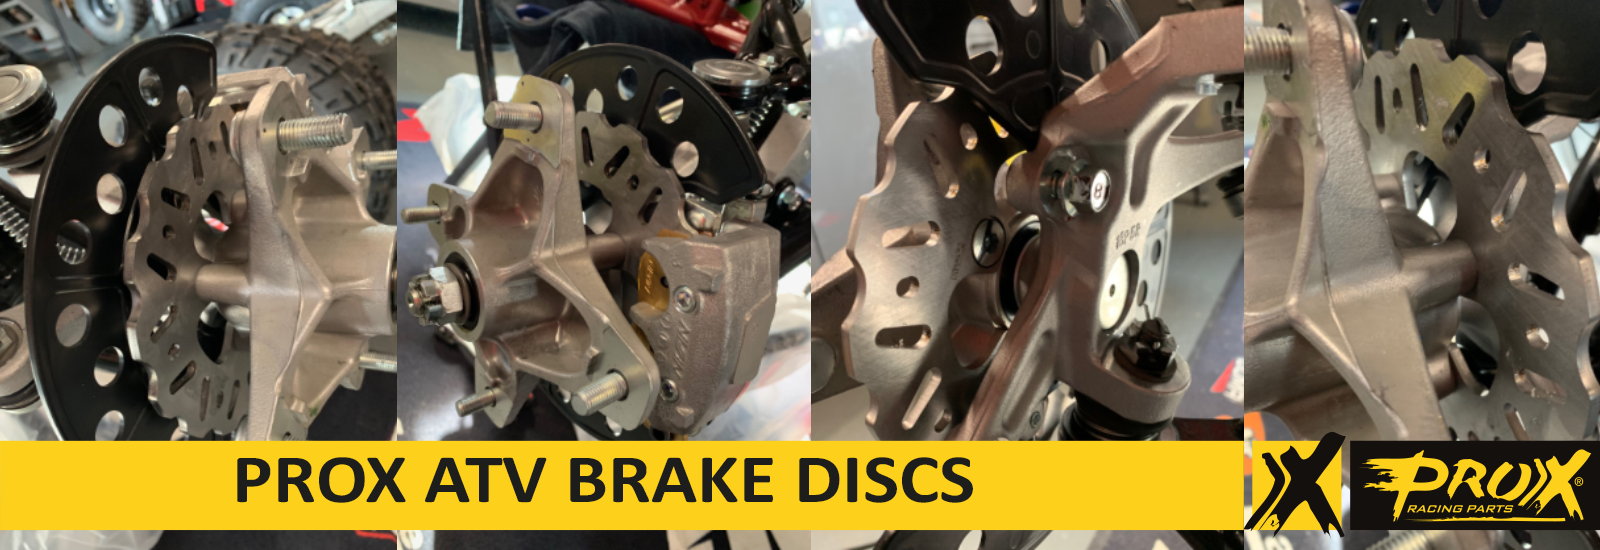 ProX Racing Parts Introduces Brake Discs for ATVs